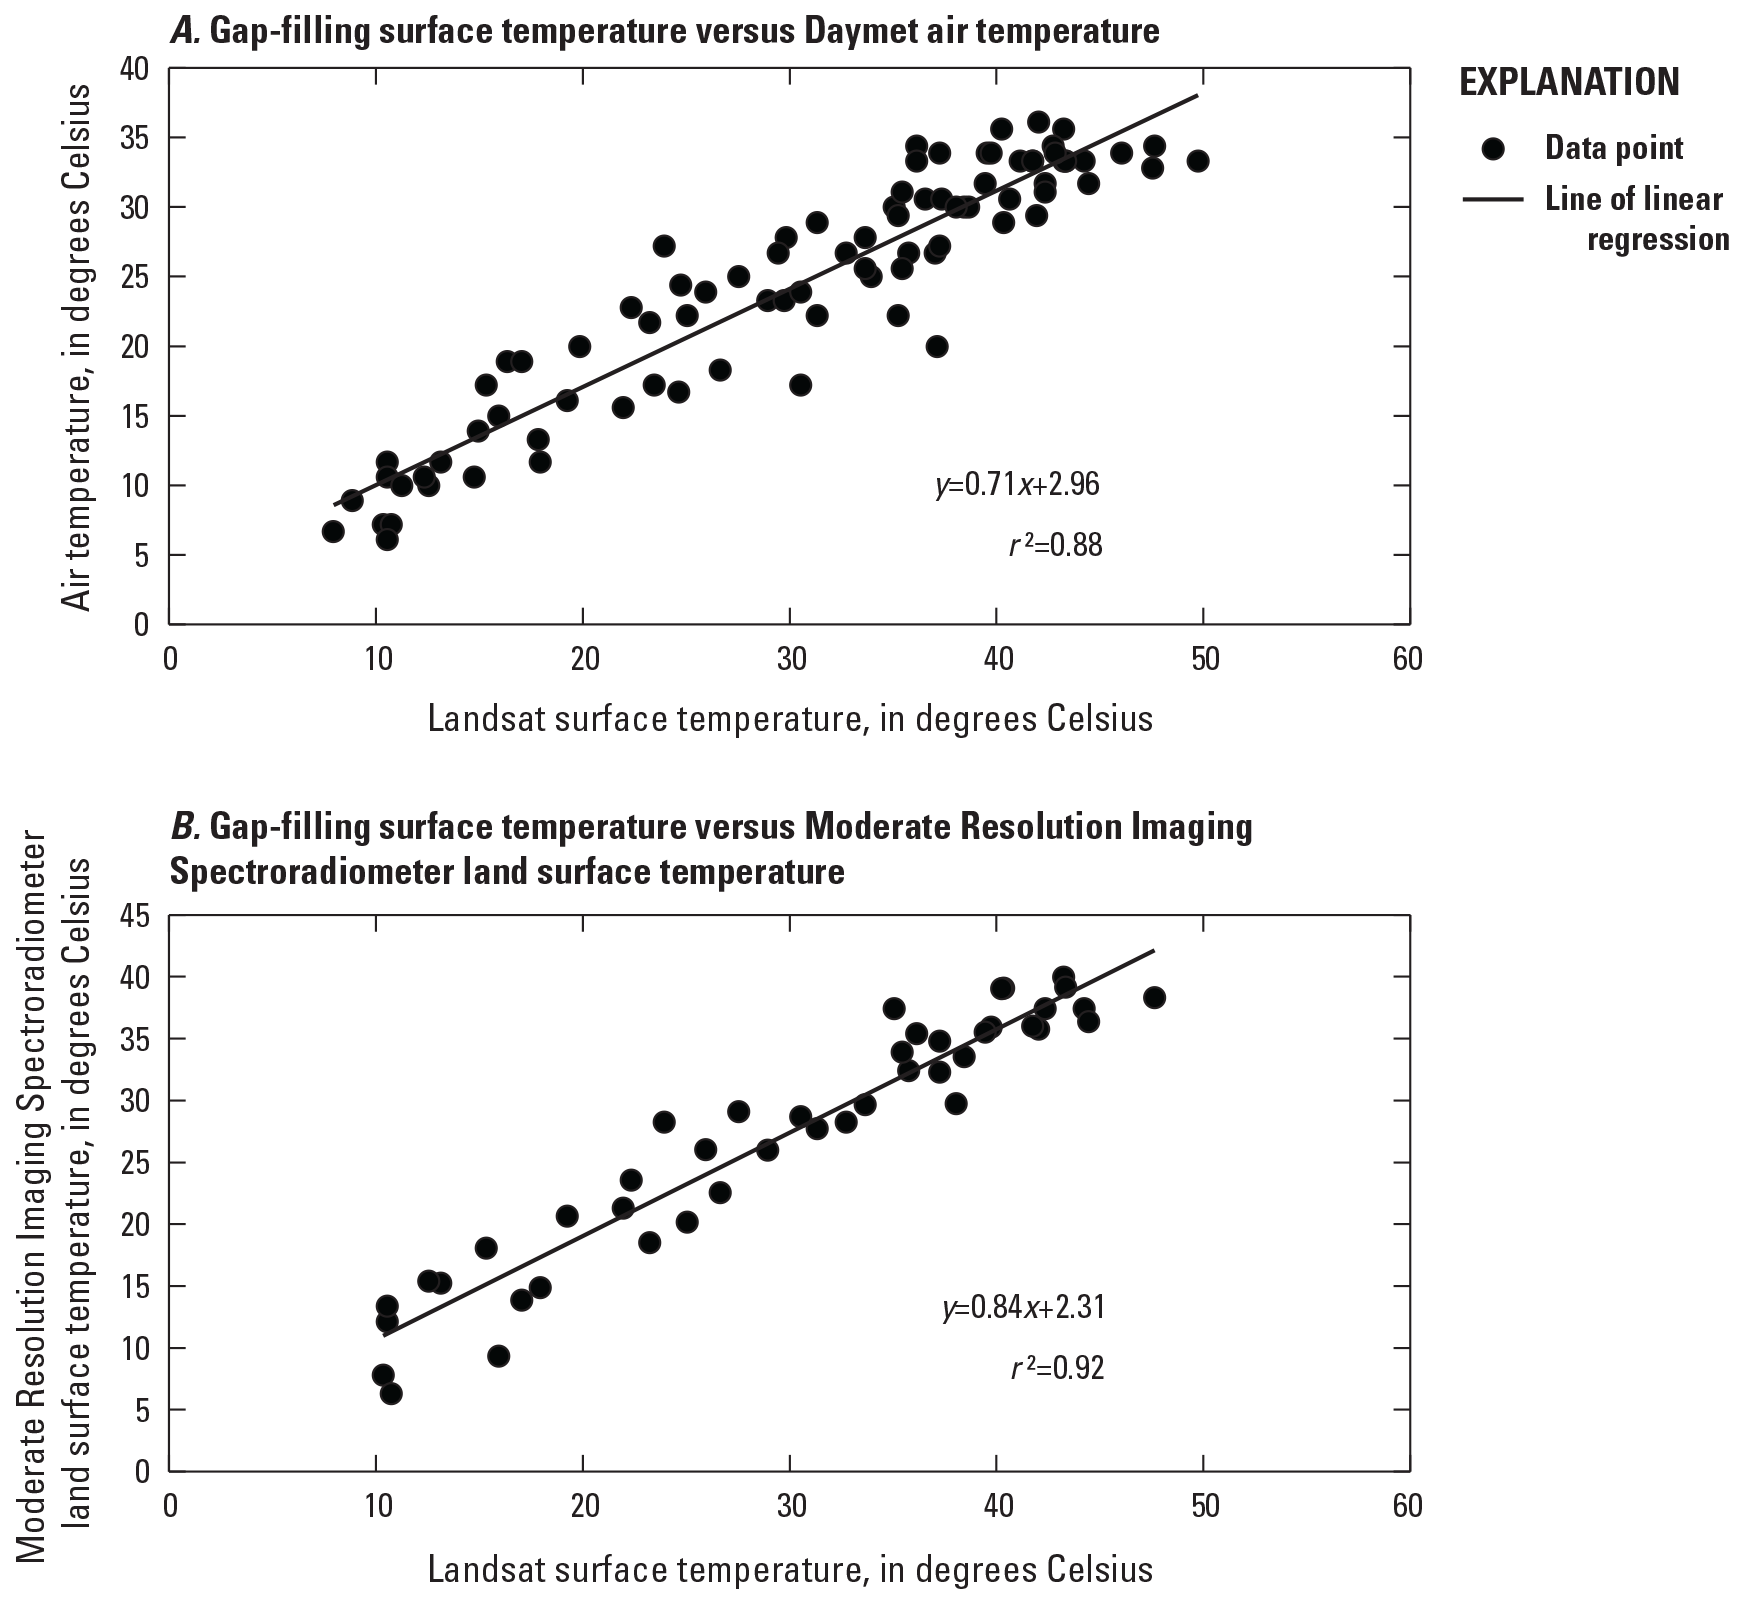 Coefficients of determination of gap-filled Landsat temperature versus Daymet air
                        and MODIS land surface temperatures.